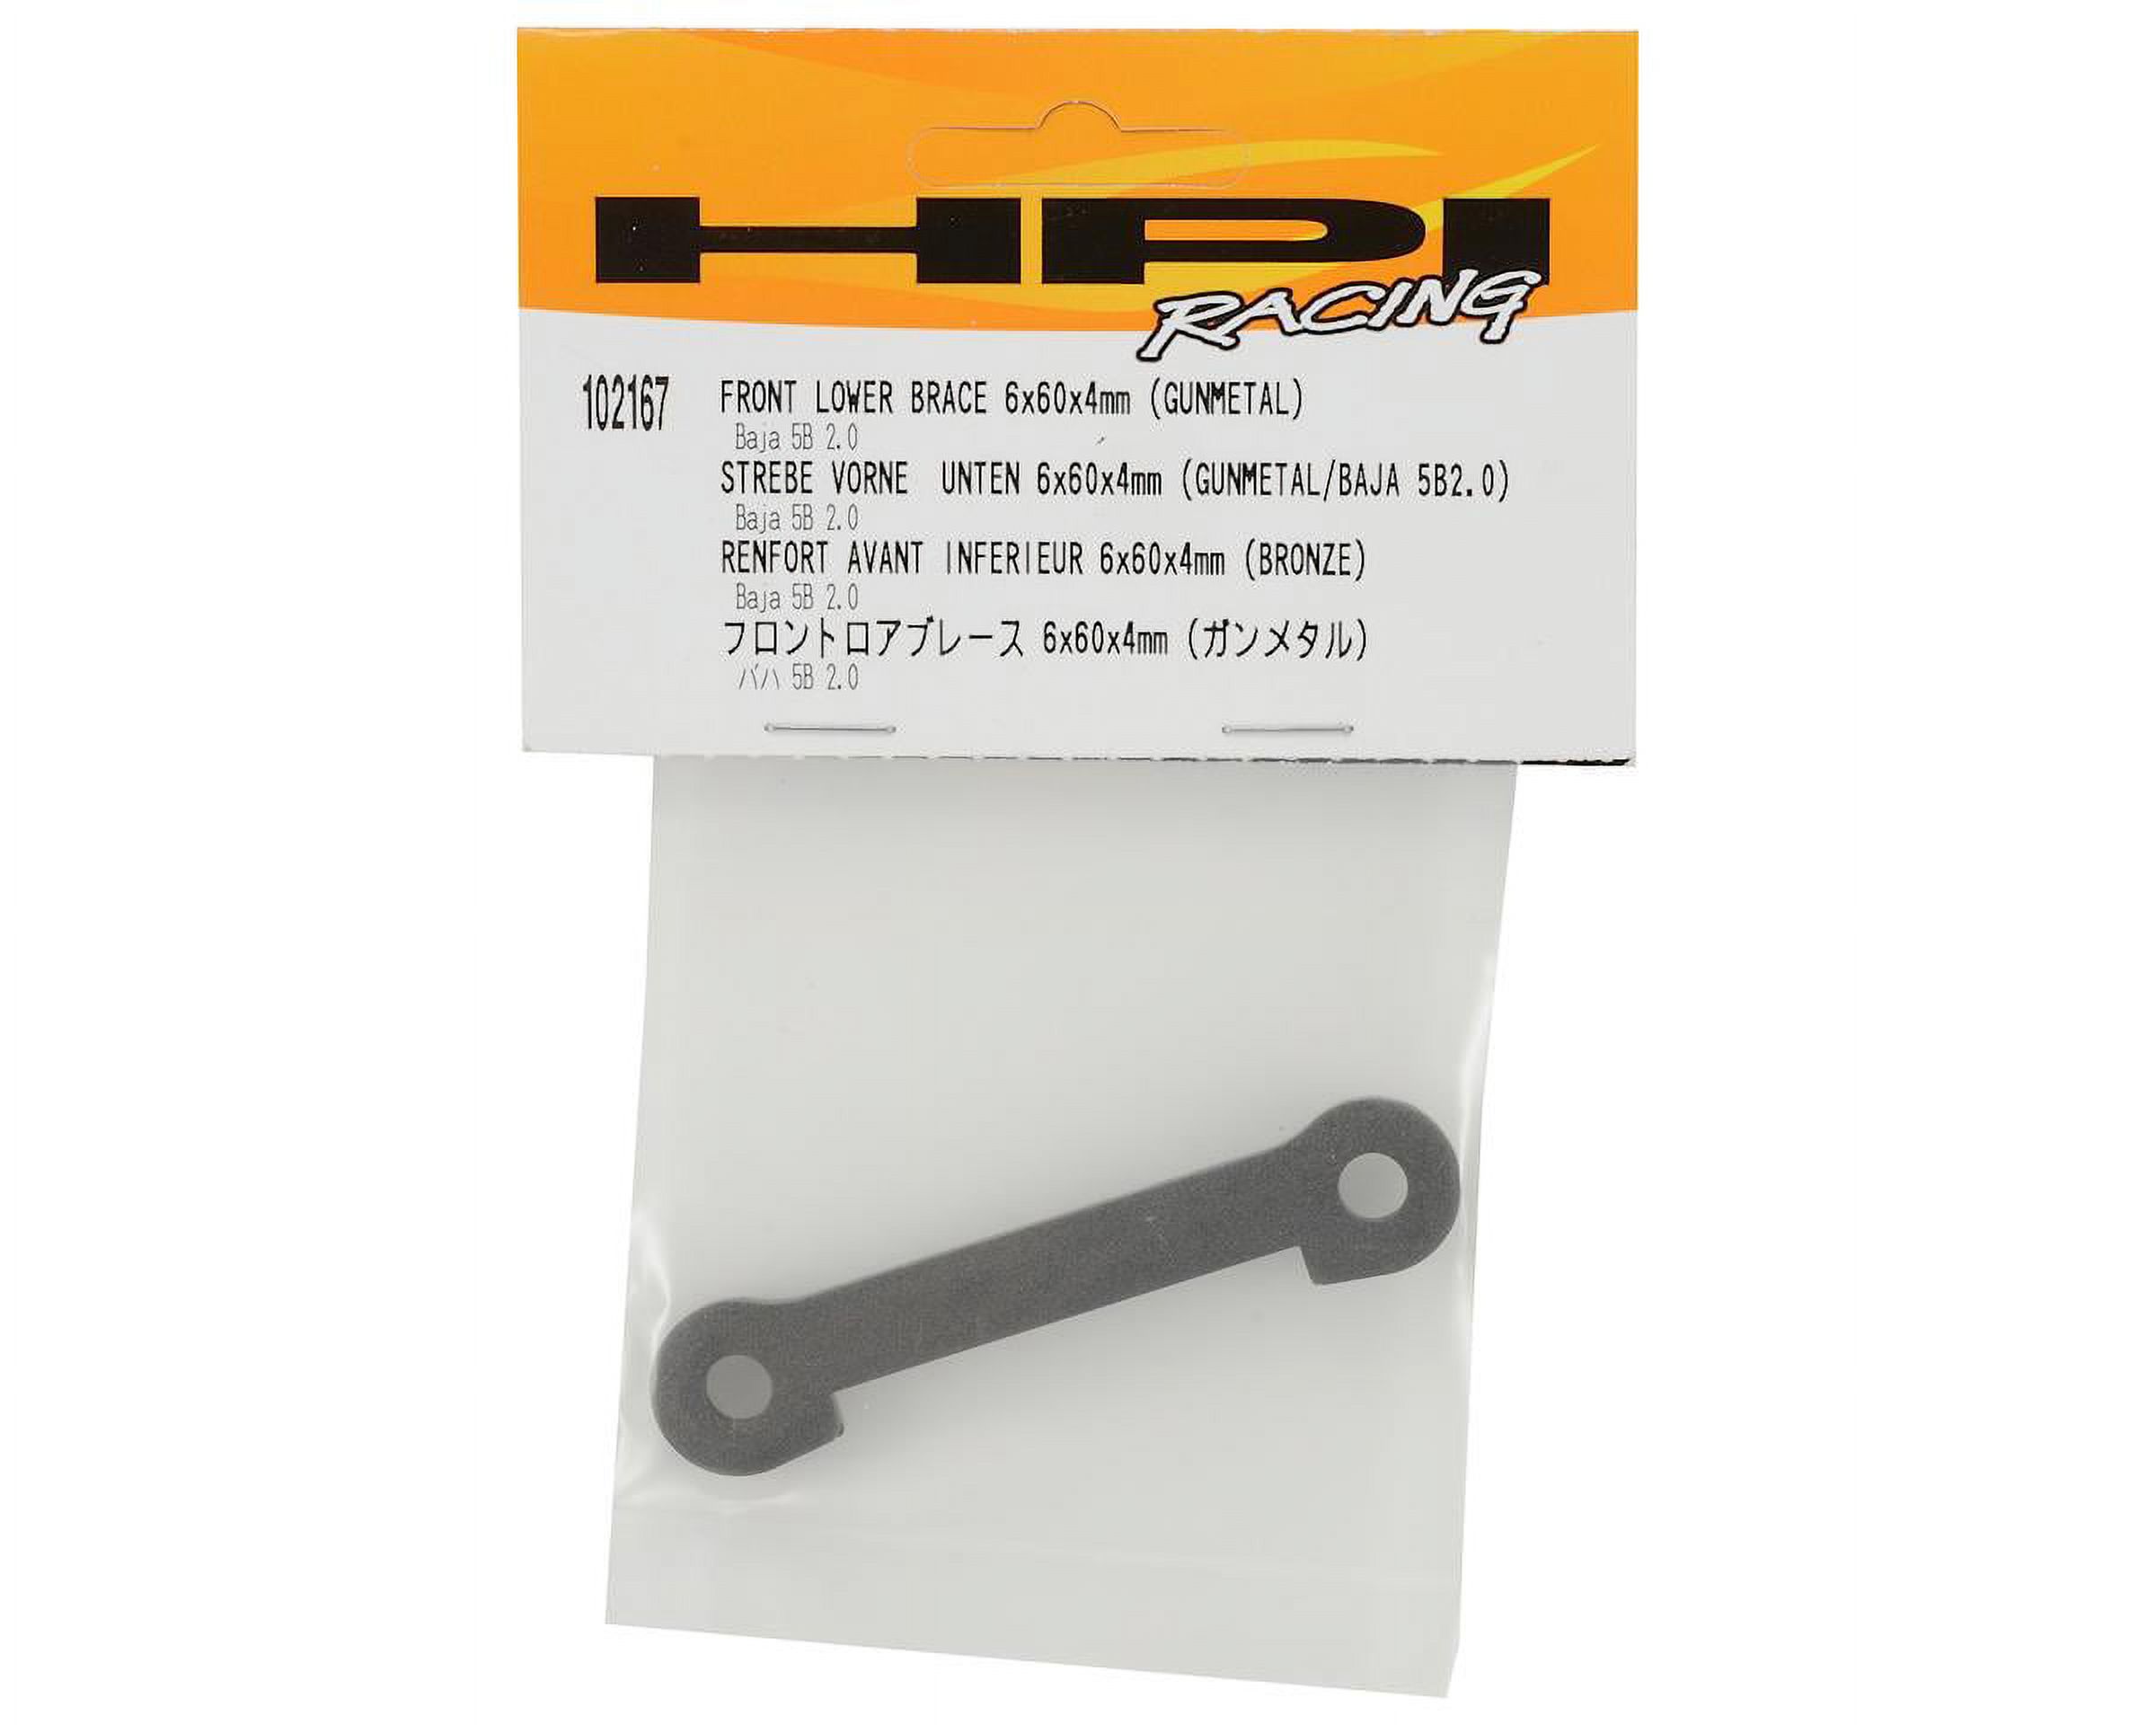 HPI Racing HPI102167 6 x 60 x 4 mm Gunmetal Front Lower Brace for Baja 5SC, D-Box & Boss - image 2 of 2